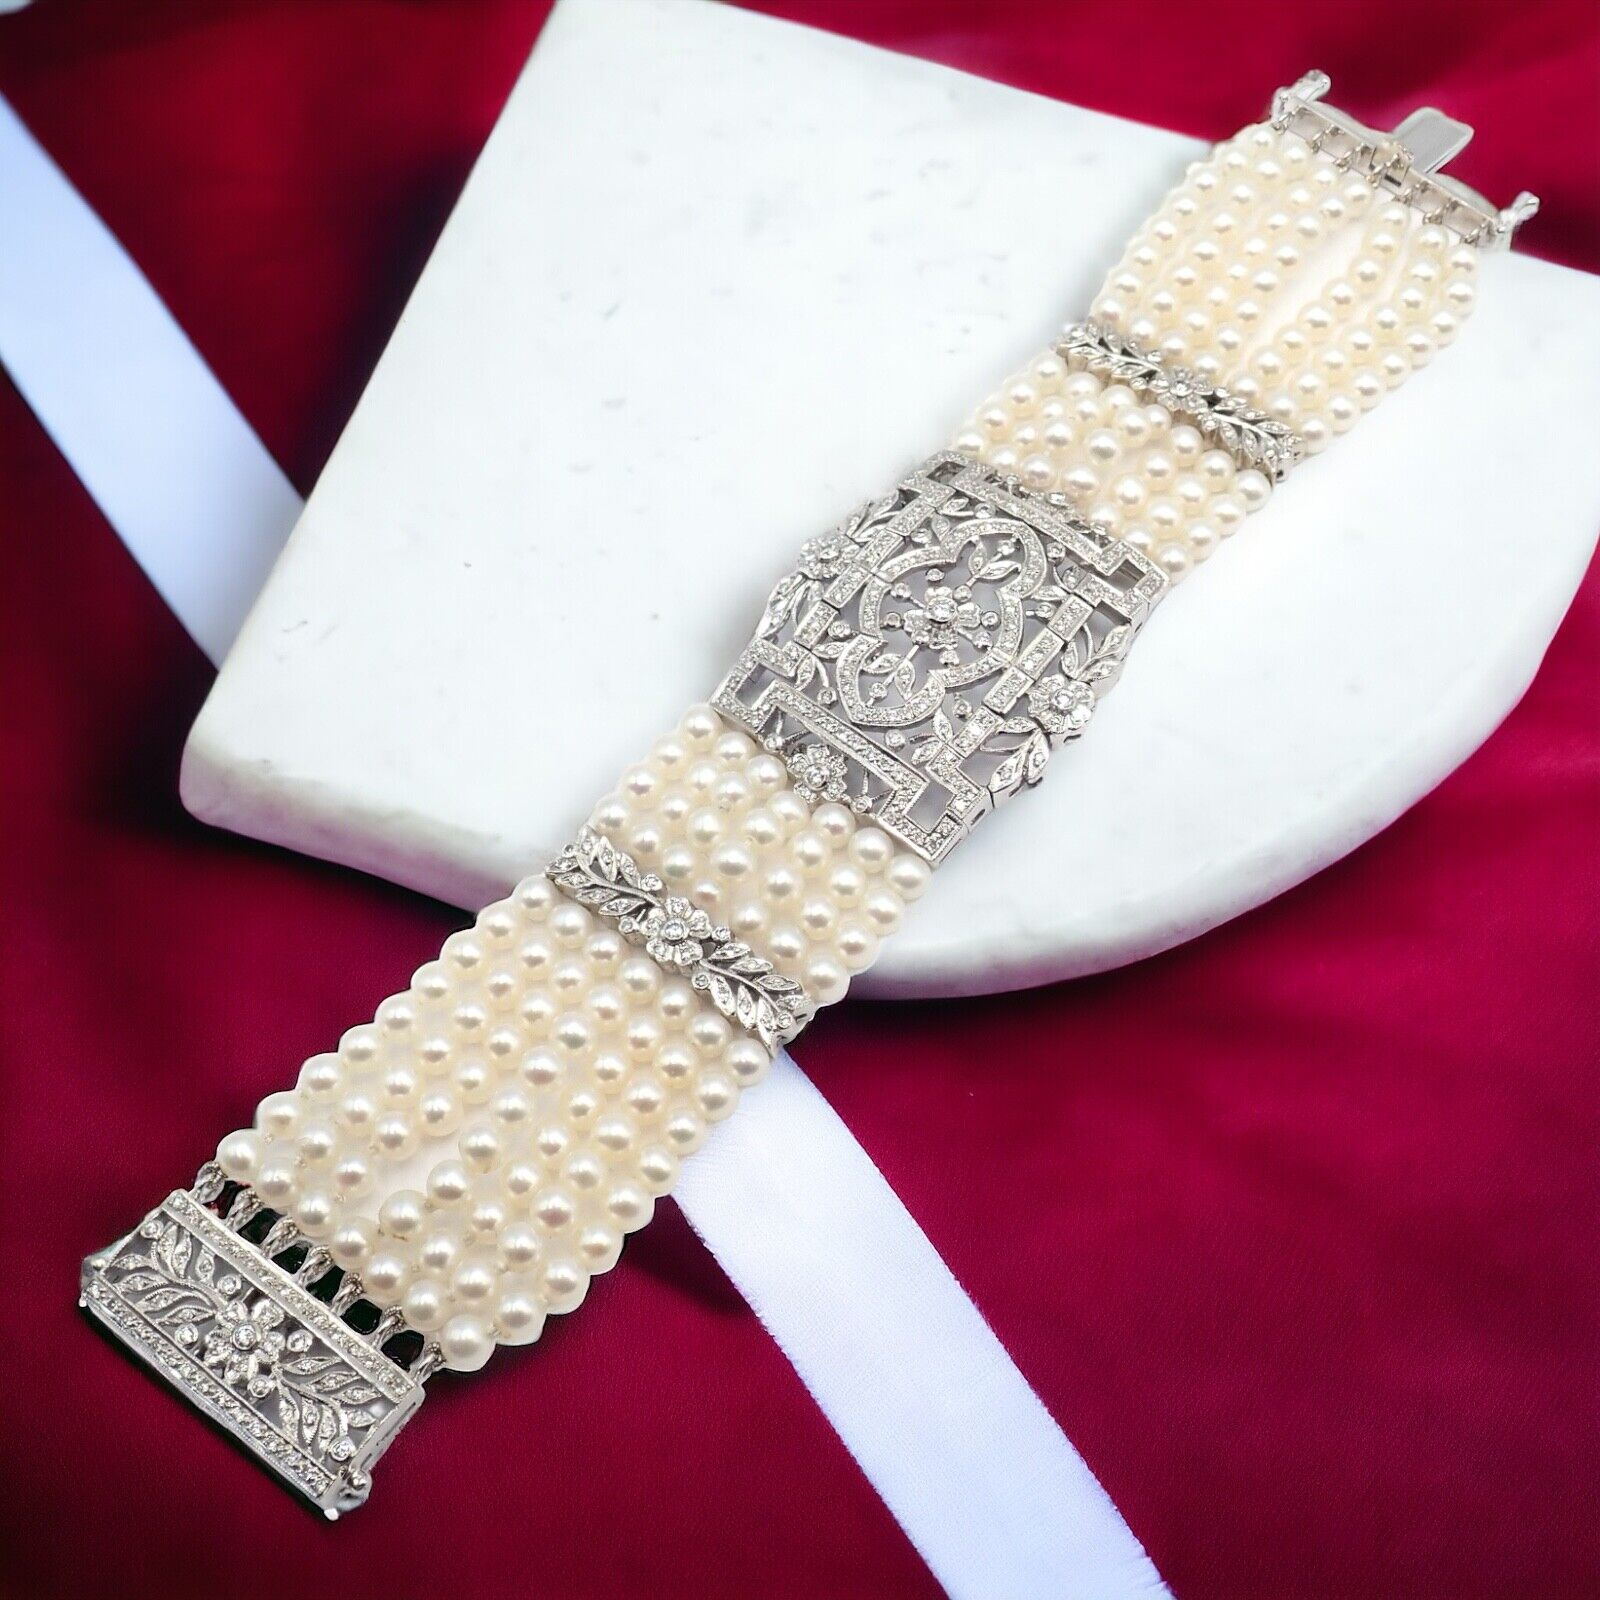 Estate Jewelry & Watches:Vintage & Antique Jewelry:Bracelets & Charms Vintage Estate 18k White Gold Diamond 7 Row 4.5mm Pearl Bracelet